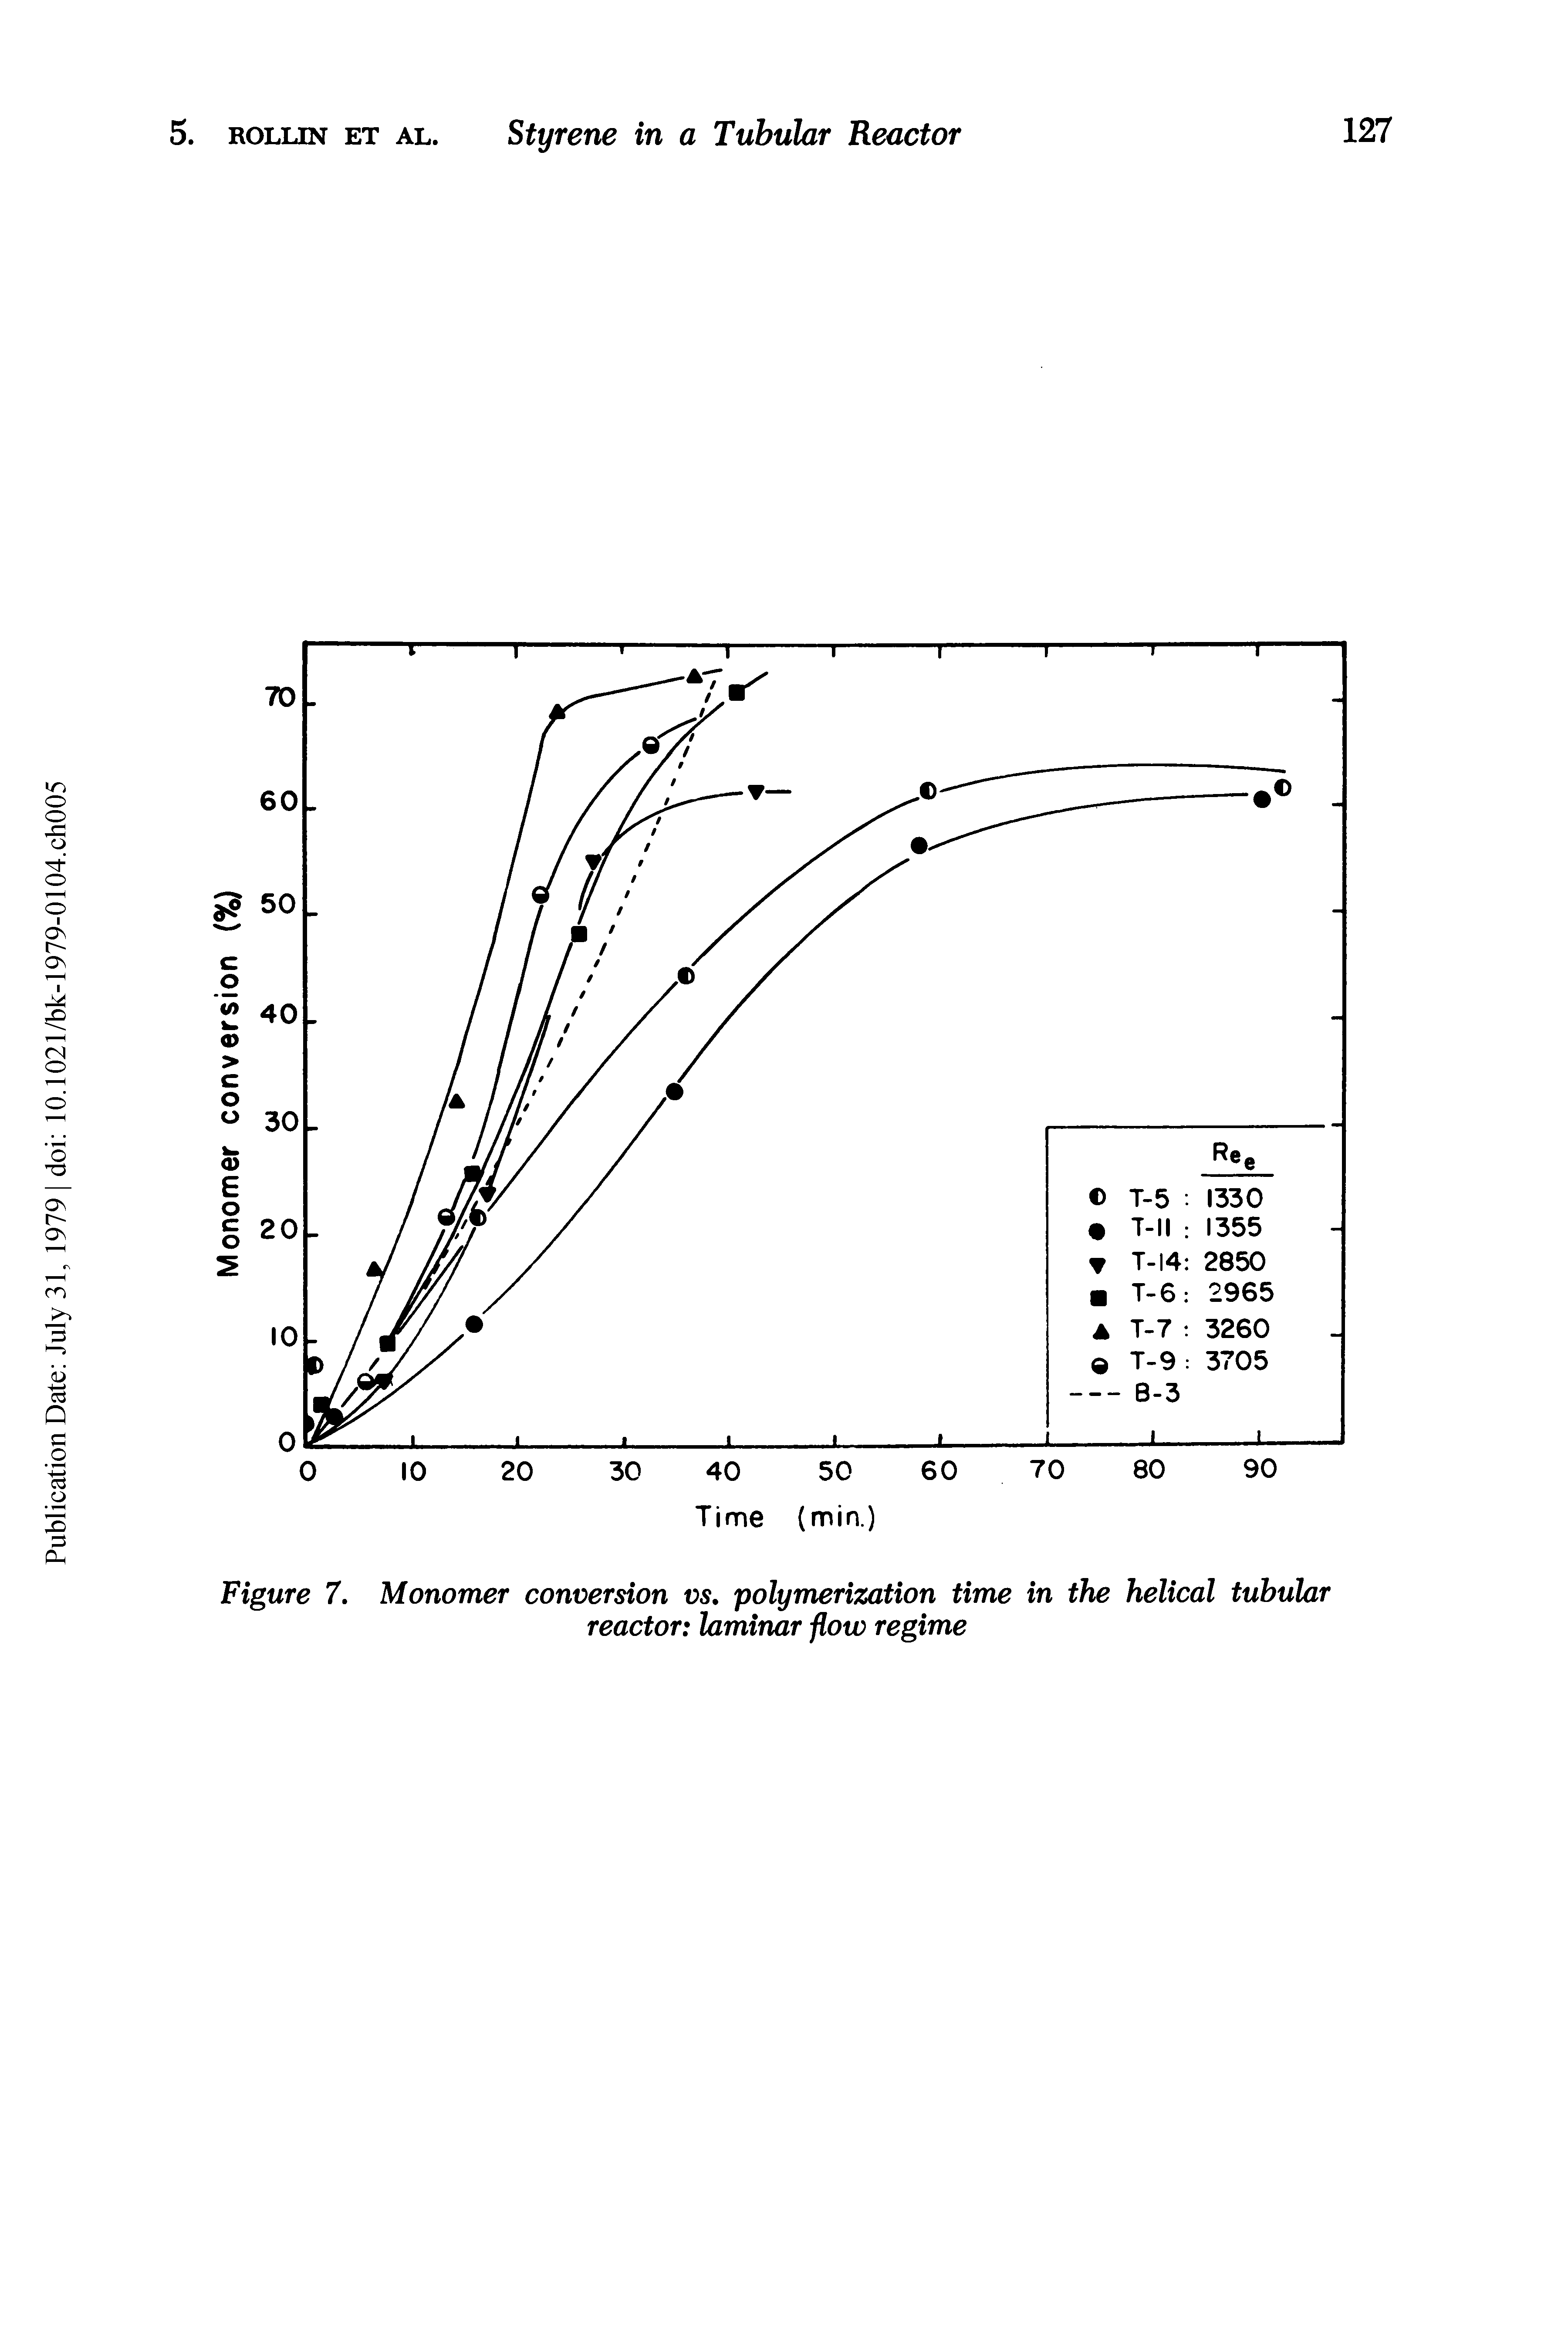 Figure 7. Monomer conversion vs, polymerization time in the helical tubular reactor laminar flow regime...